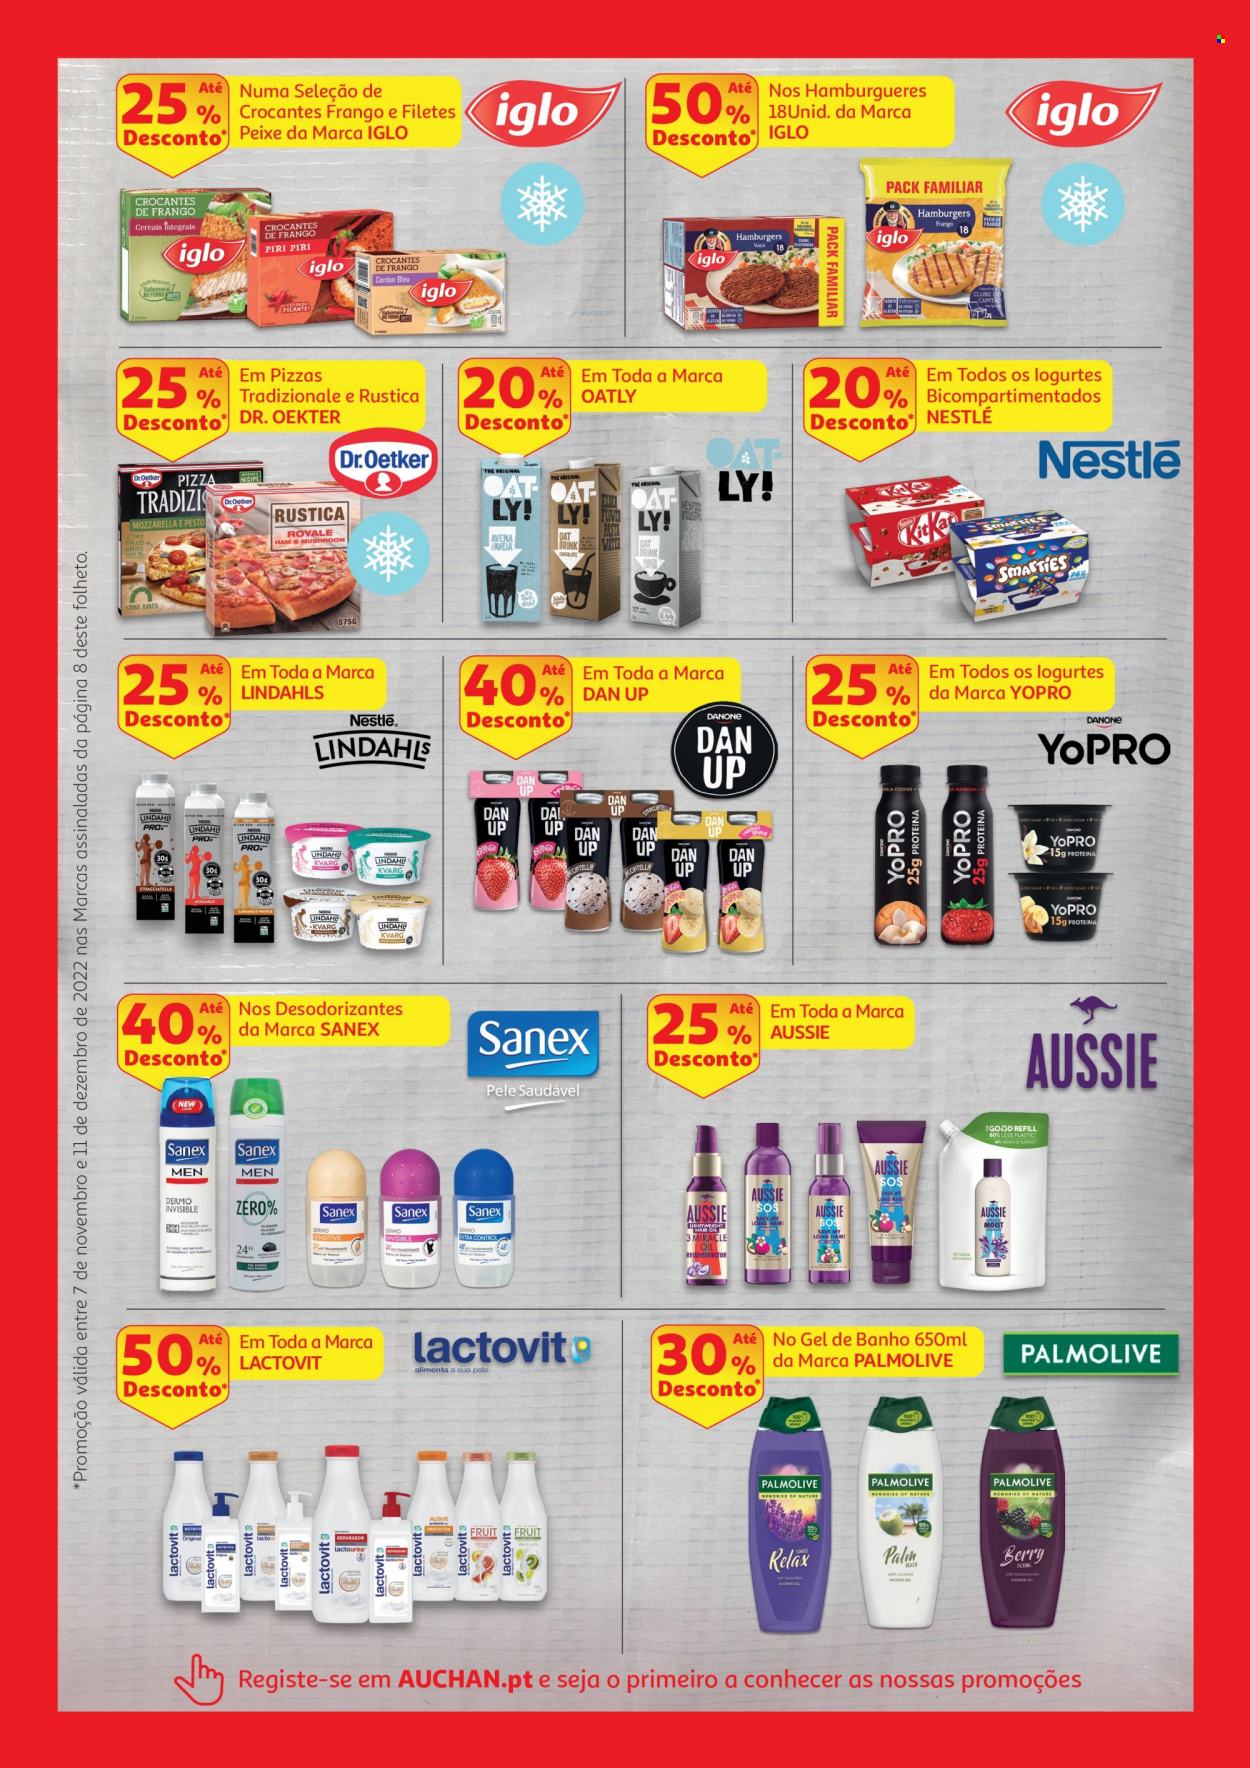 thumbnail - Folheto Auchan - 7.11.2022 - 11.12.2022 - Produtos em promoção - hamburger, Iglo, peixe, pizza, Yopro, Nestlé, Palmolive, Lactovit, gel de banho. Página 8.